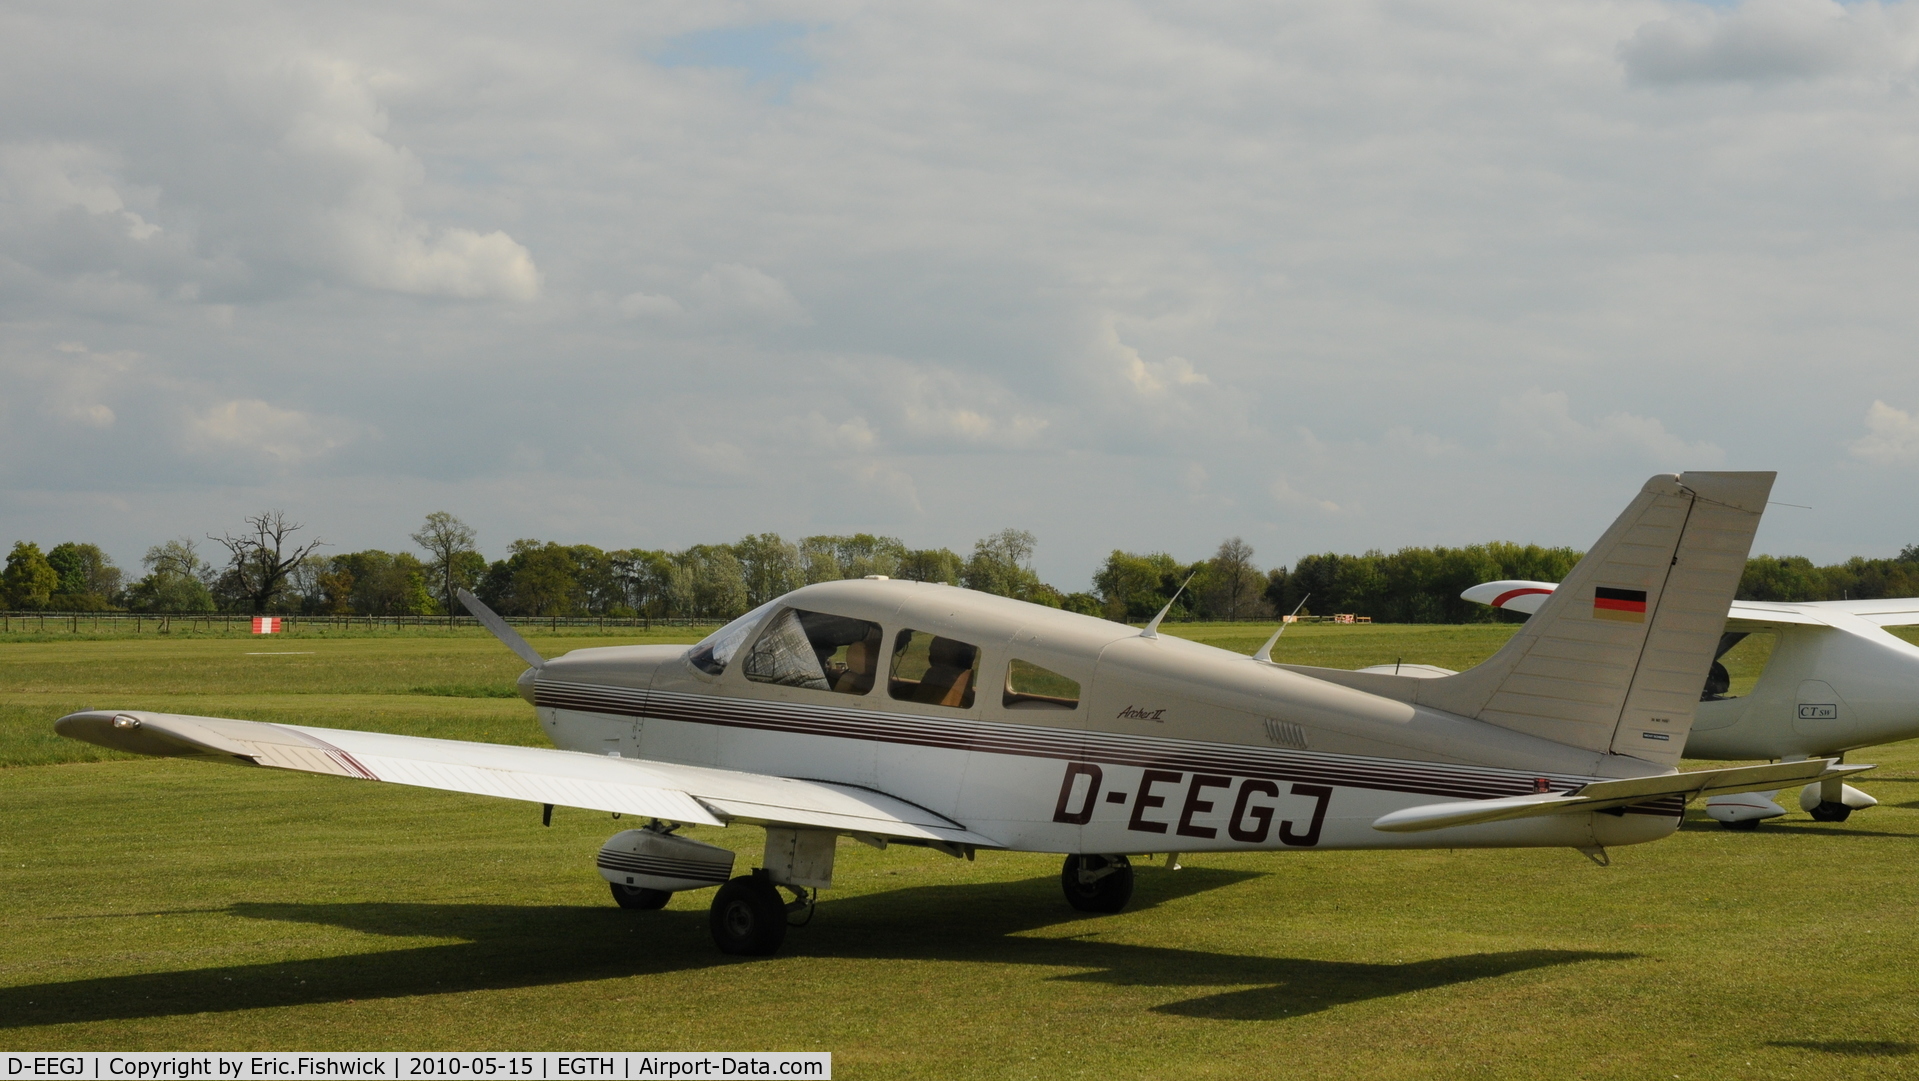 D-EEGJ, Piper PA-28-181 C/N 2890066, D-EEGJ at Shuttleworth May Sunset Air Display